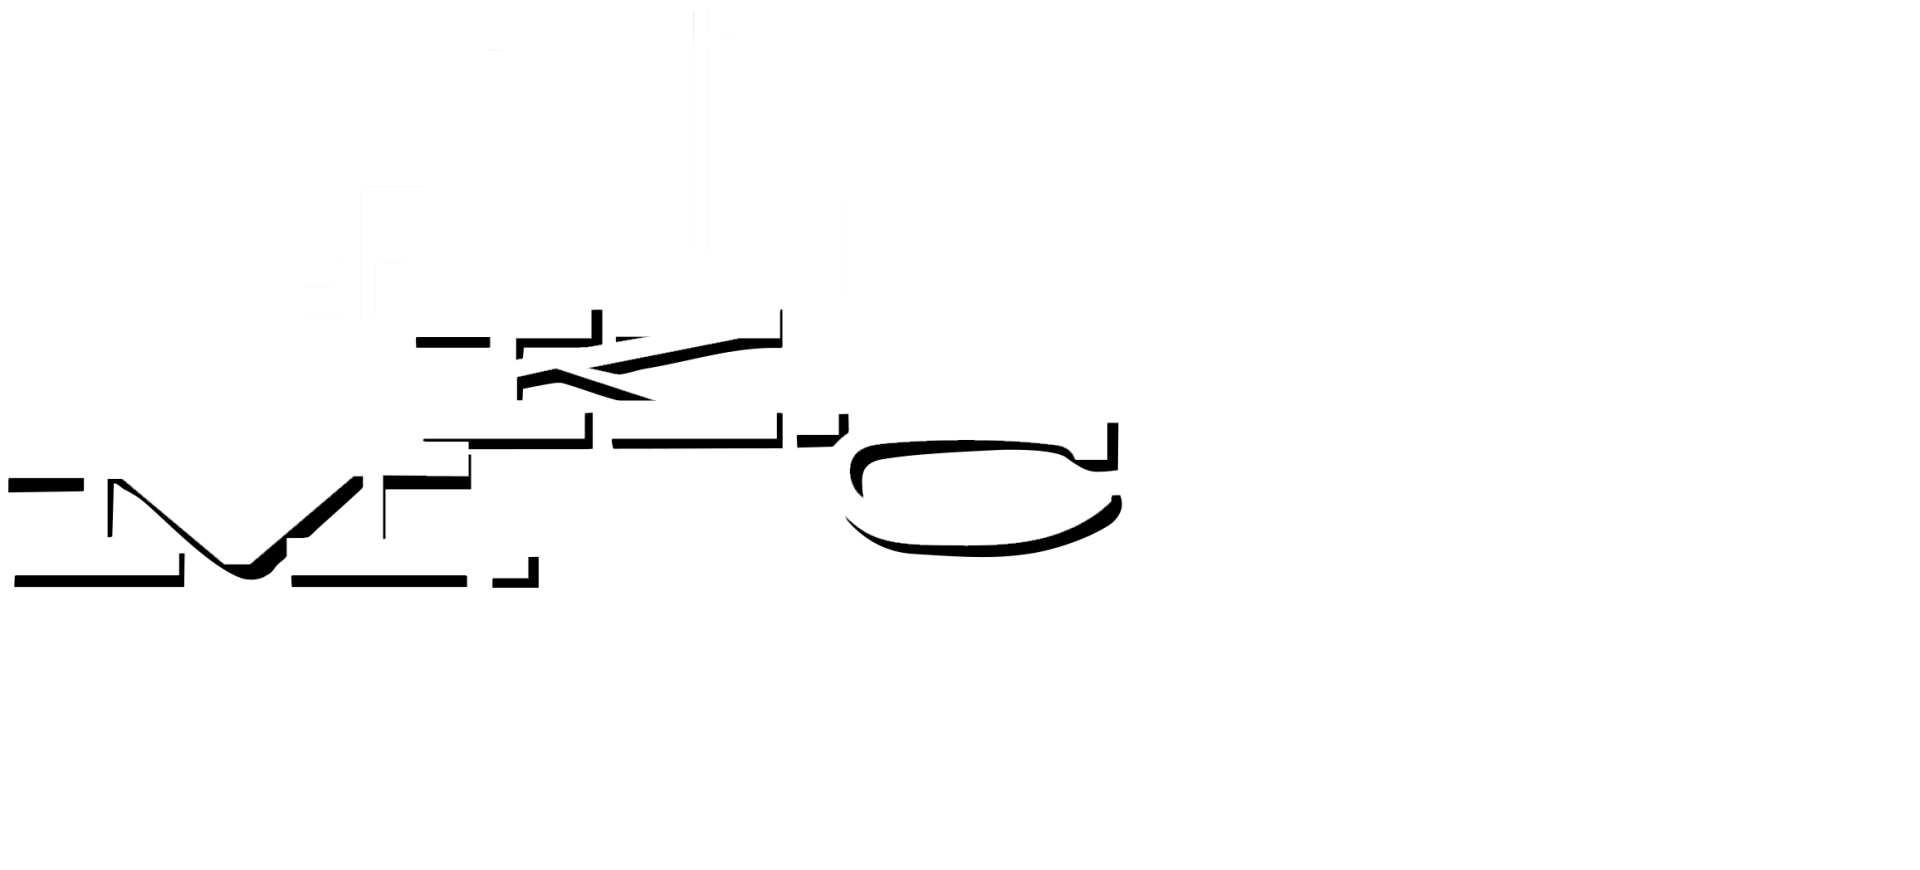 Mike Koenig Construction Co.